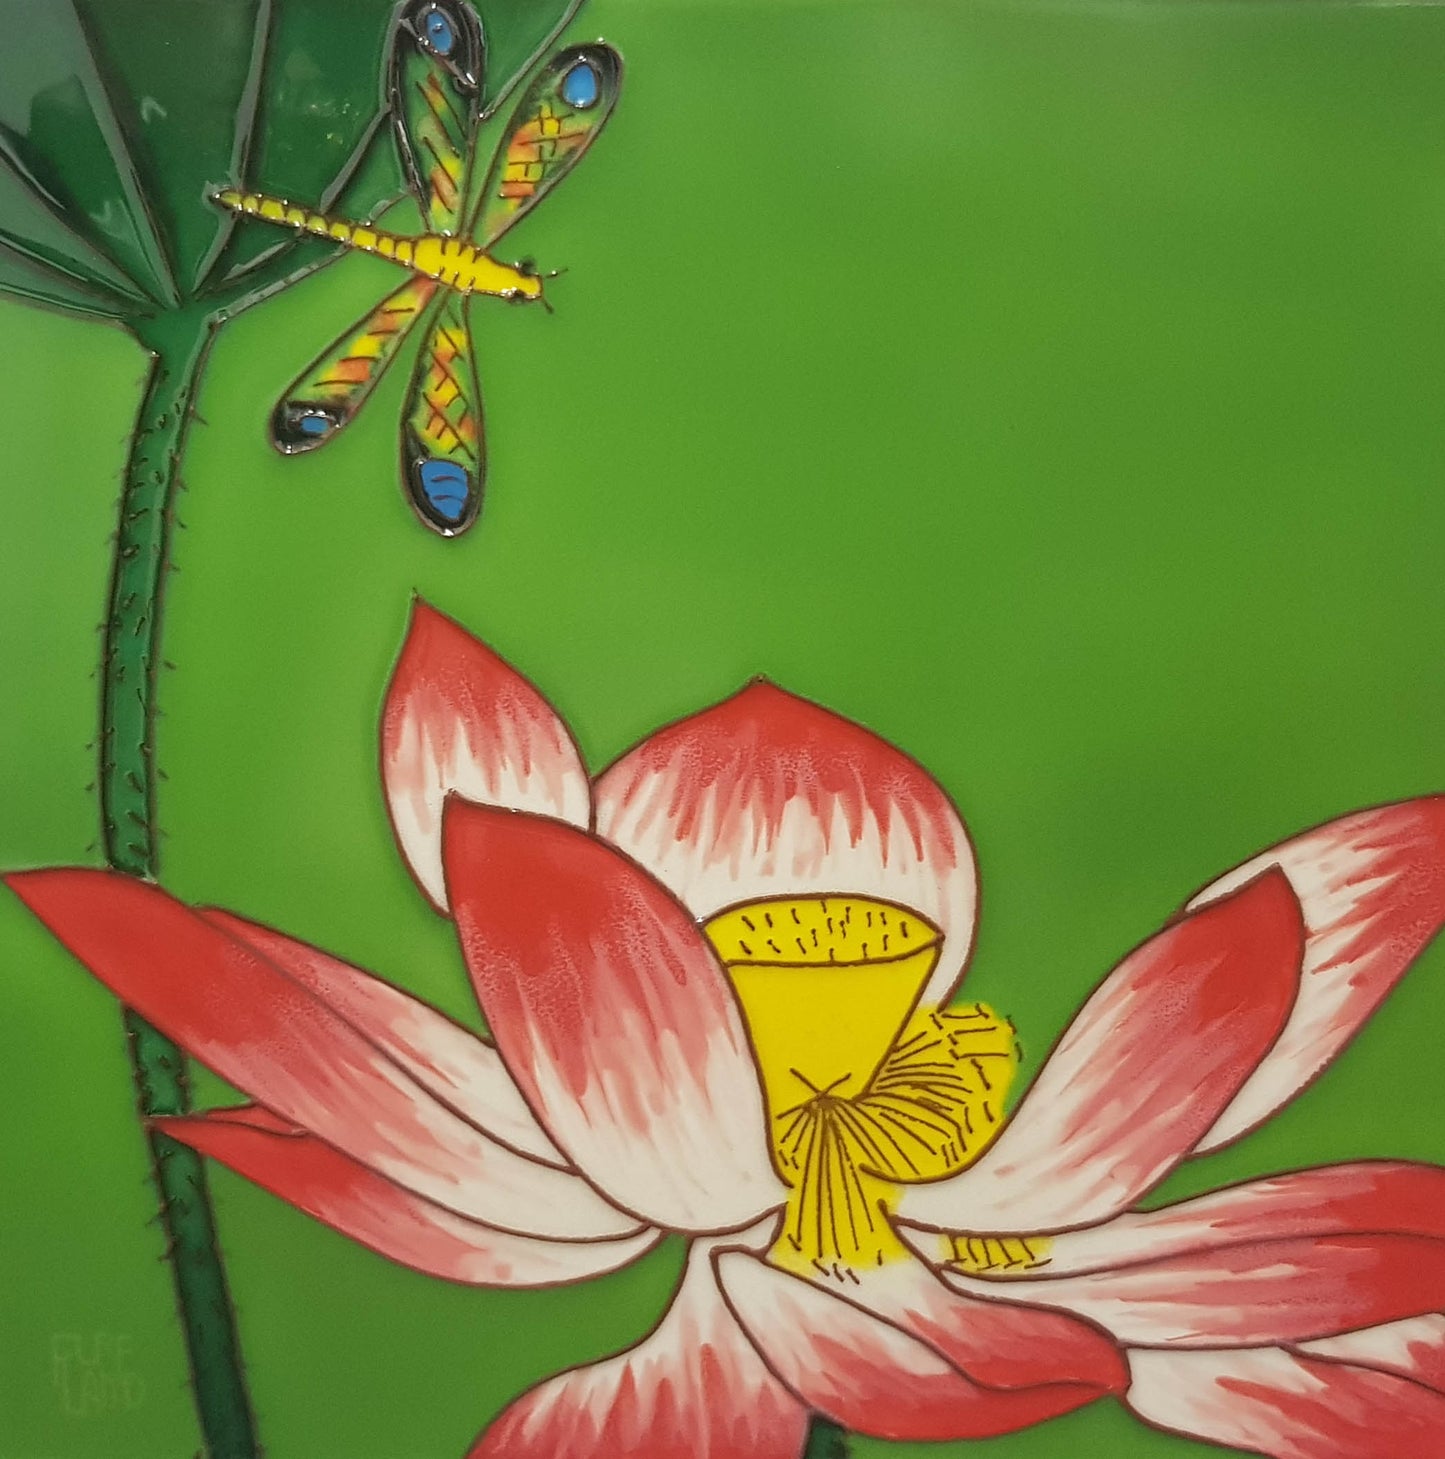 2163 Lotus Flower with Dragonfly Top Left 20cm x 20cm Pureland Ceramic Tile